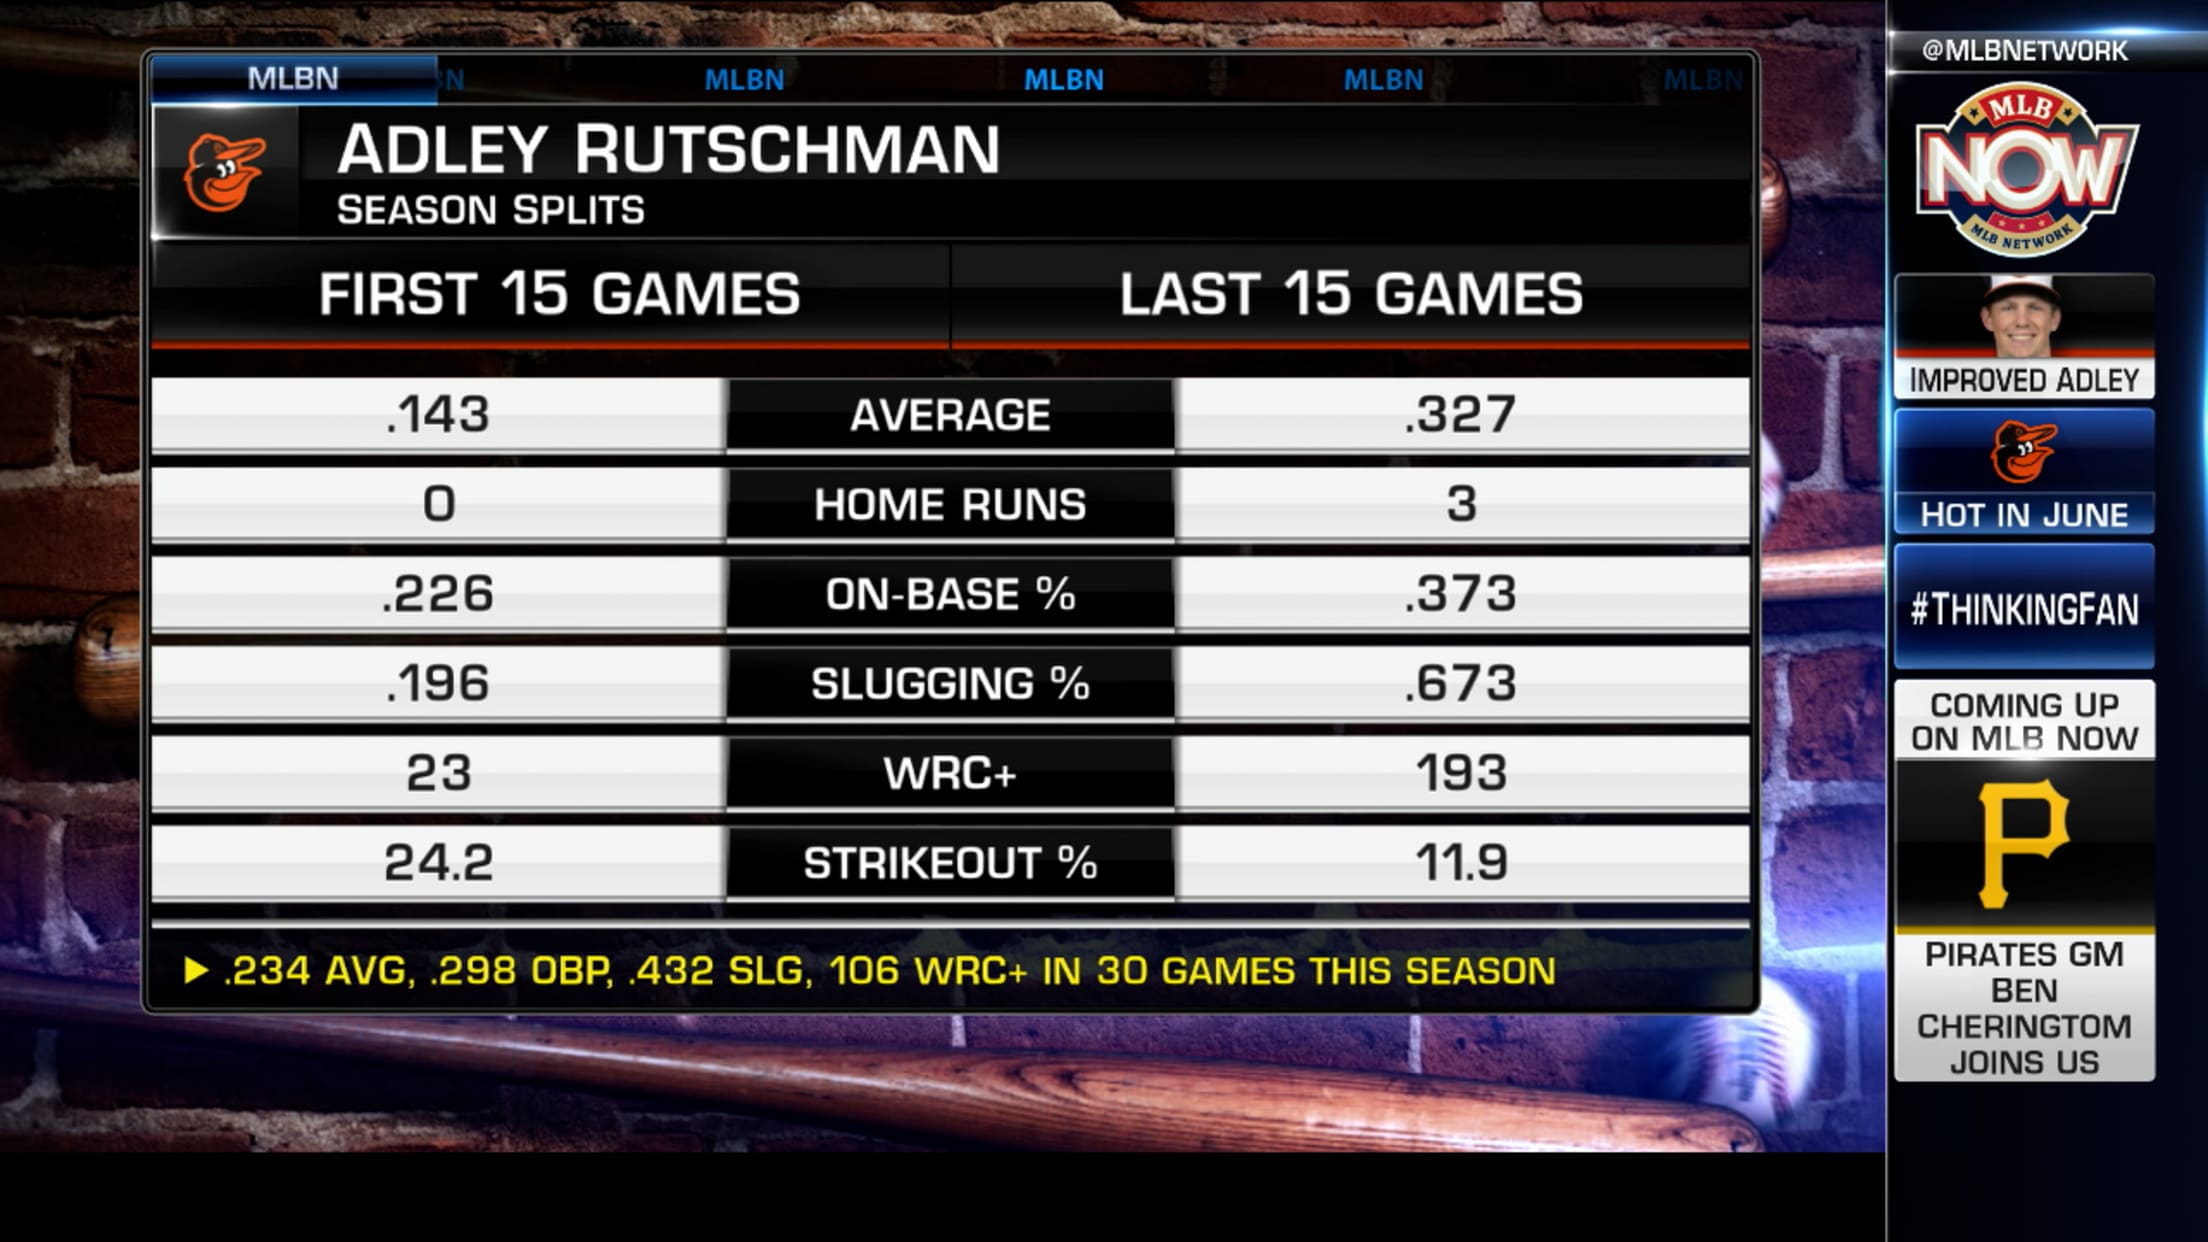 MLB Now on Adley Rutschman